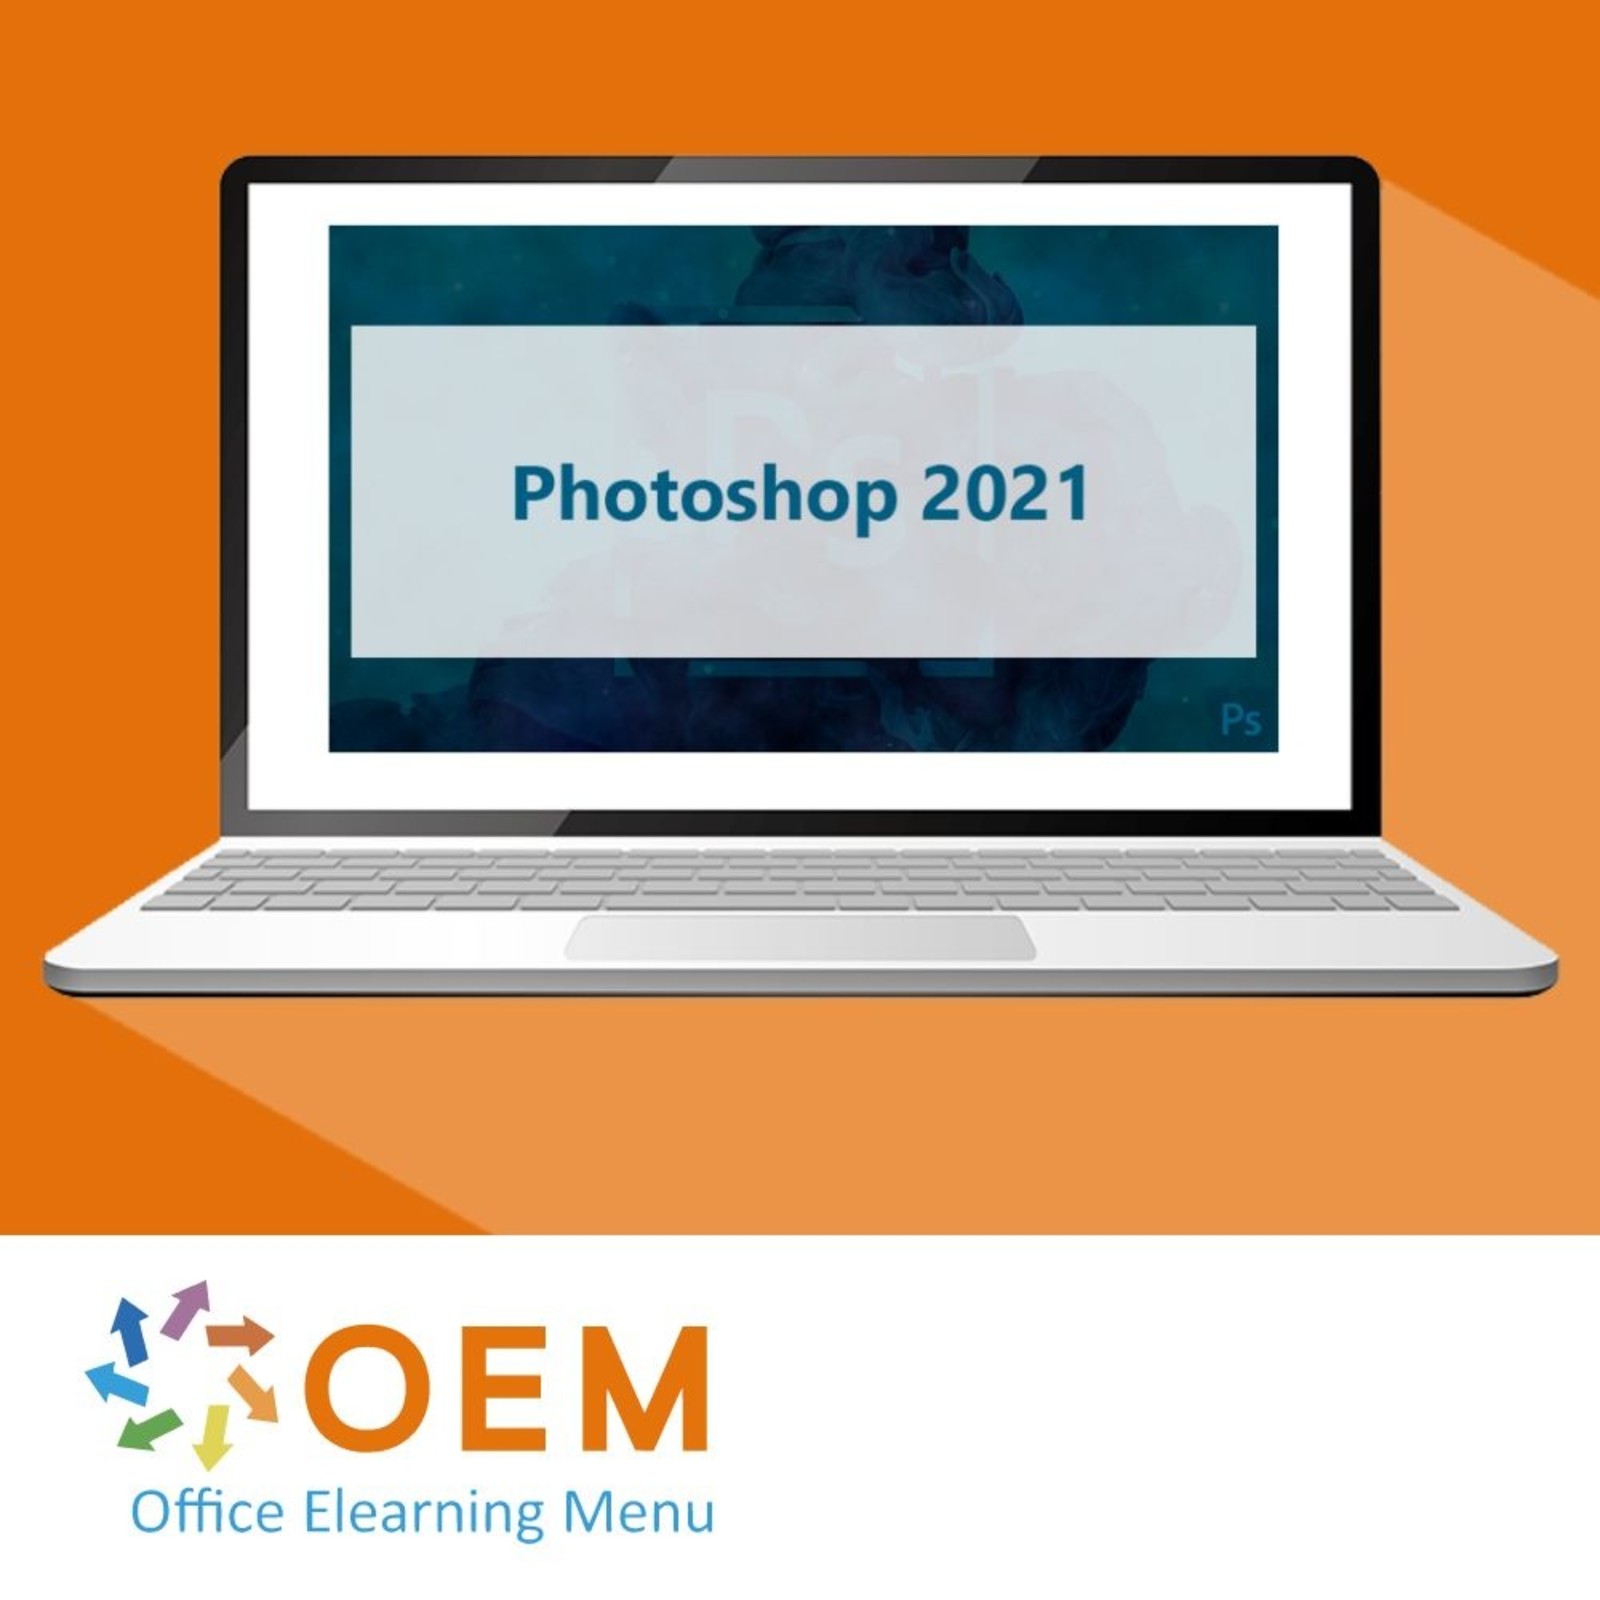 Adobe Vaardigheden Leren: Expert-ICT Trainingen Adobe Photoshop CC 2021 Course E-Learning